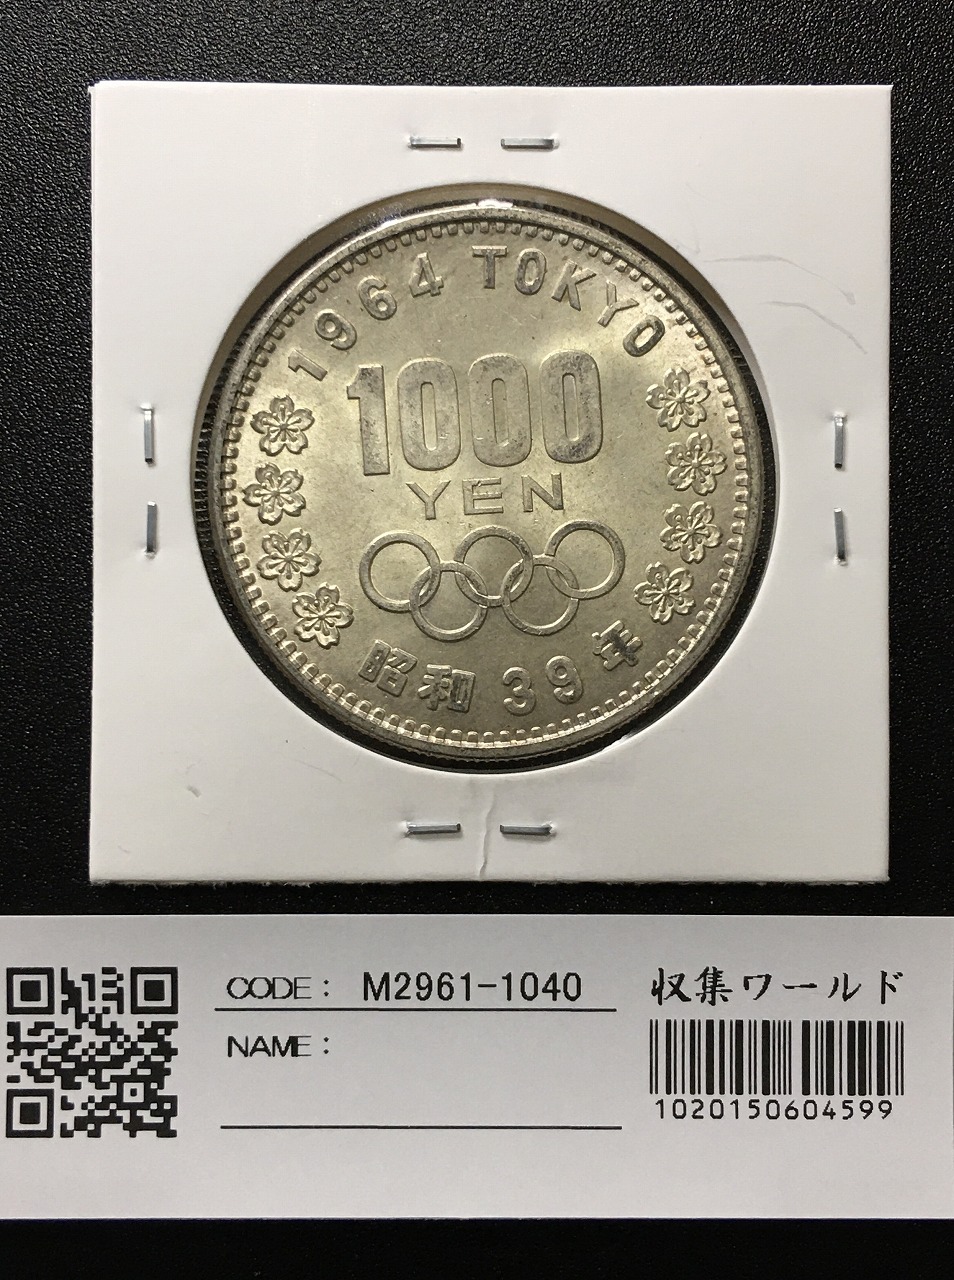 東京オリンピック記念 1964年(S39) 1000円銀貨 完全未使用-1040 | 収集 